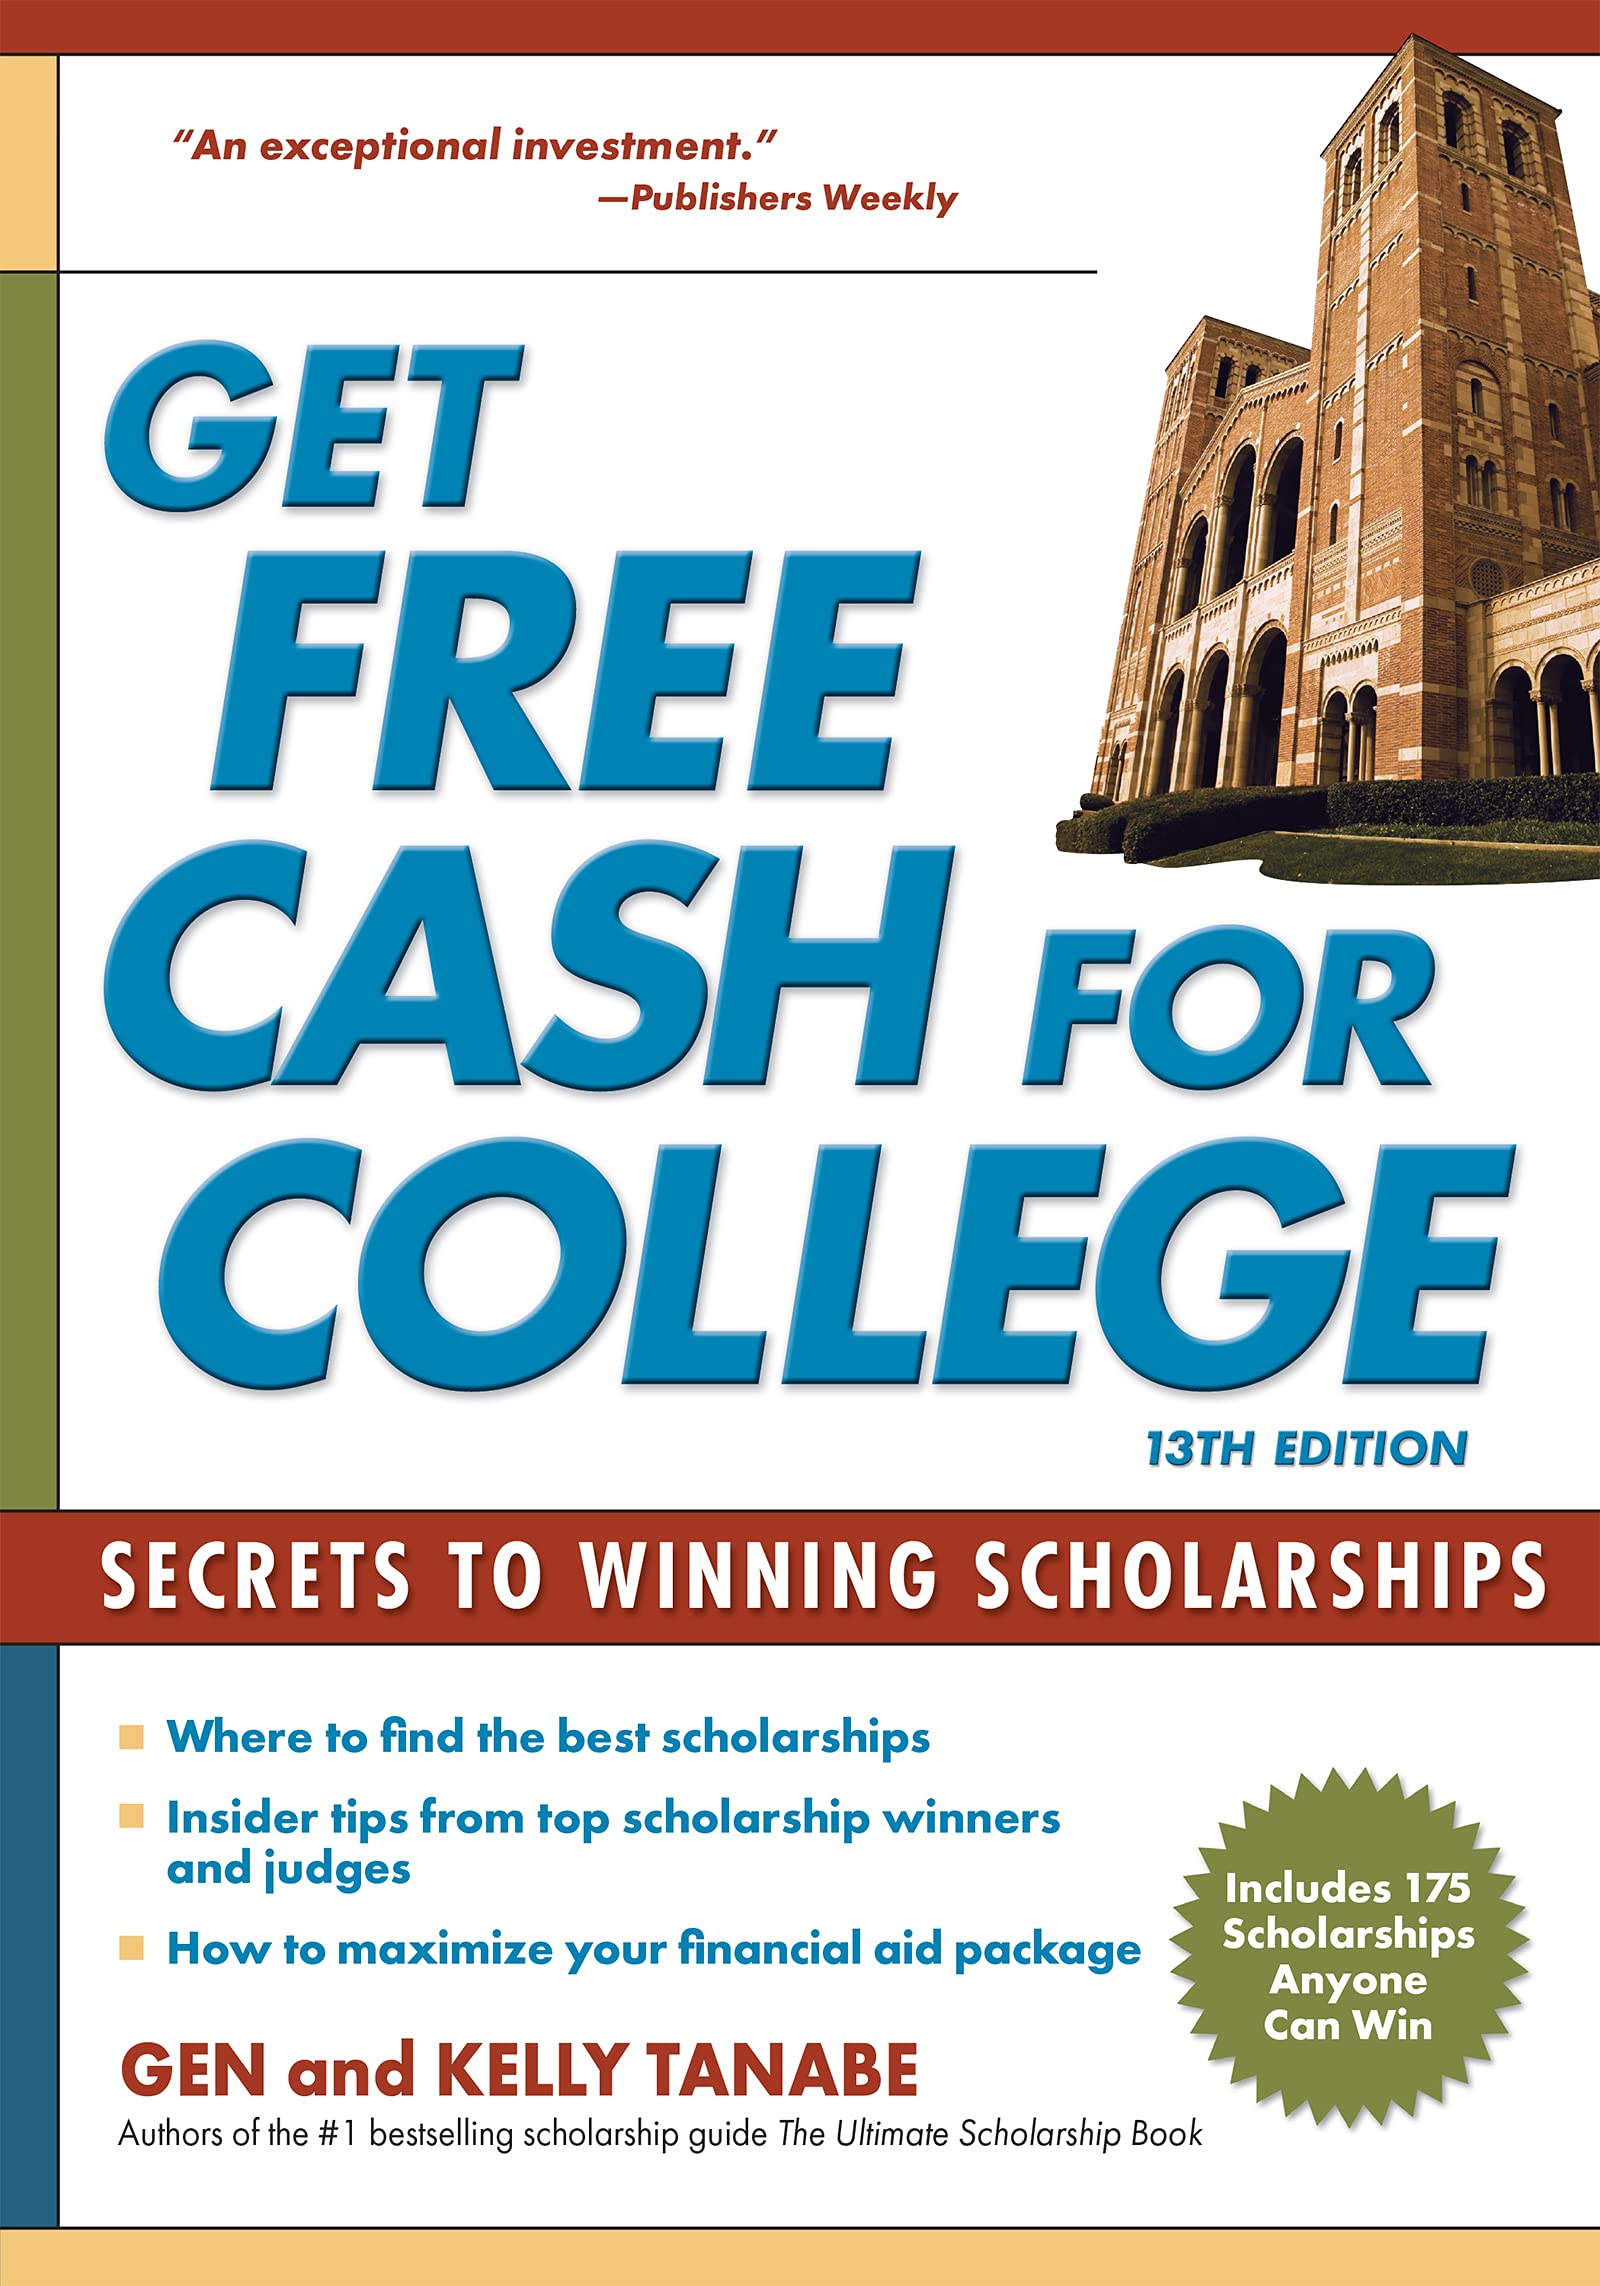 Get Free Cash for College: Secrets to Winning Scholarships (13TH ed.) - SureShot Books Publishing LLC